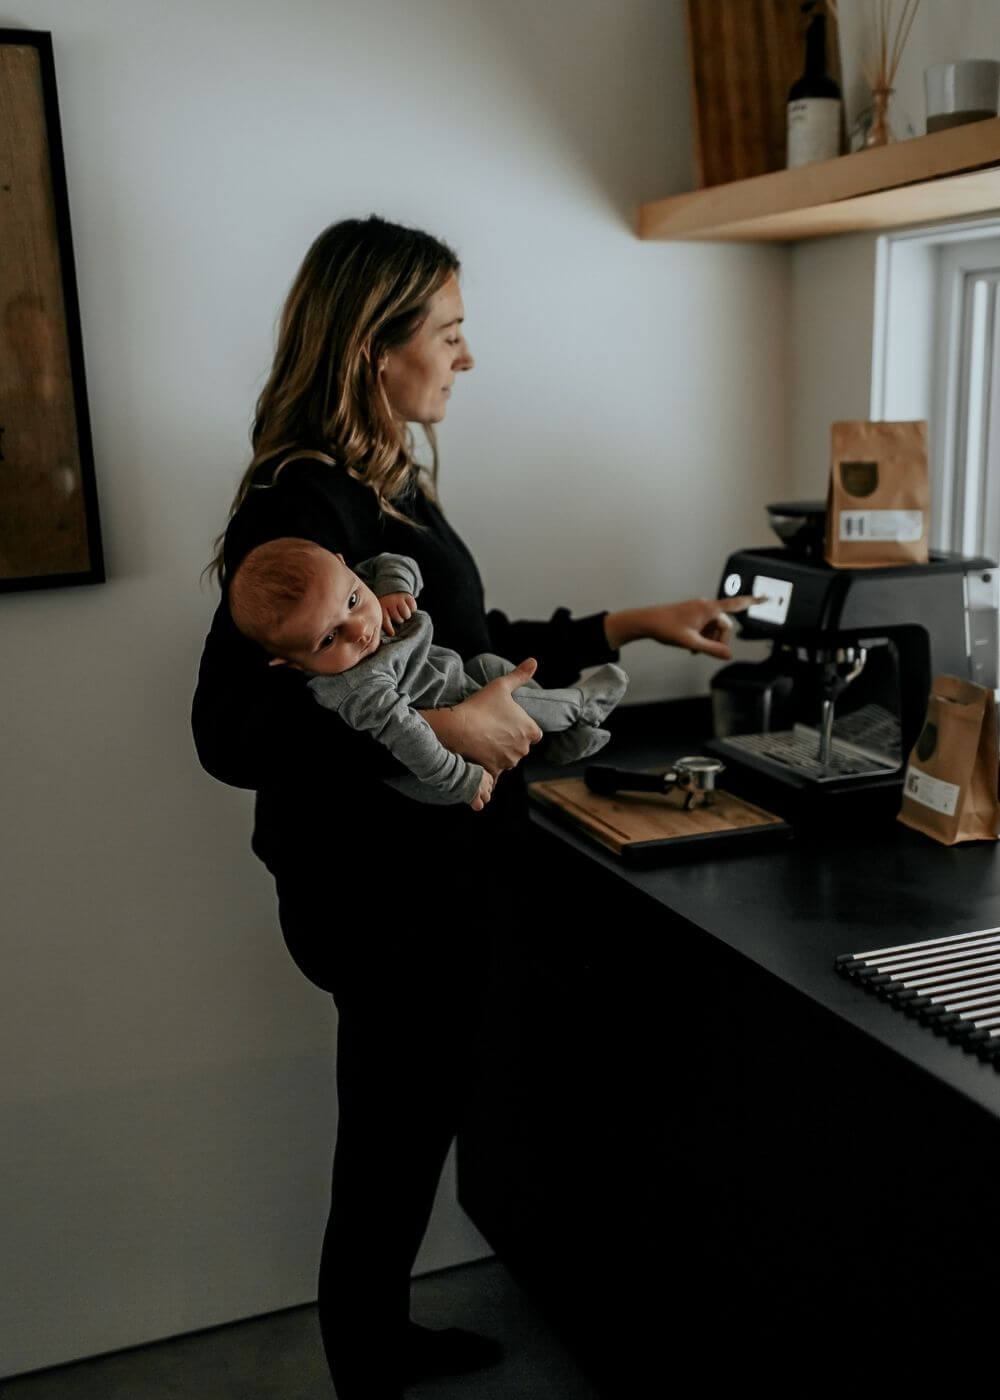 karolina krupa avec bébé et café